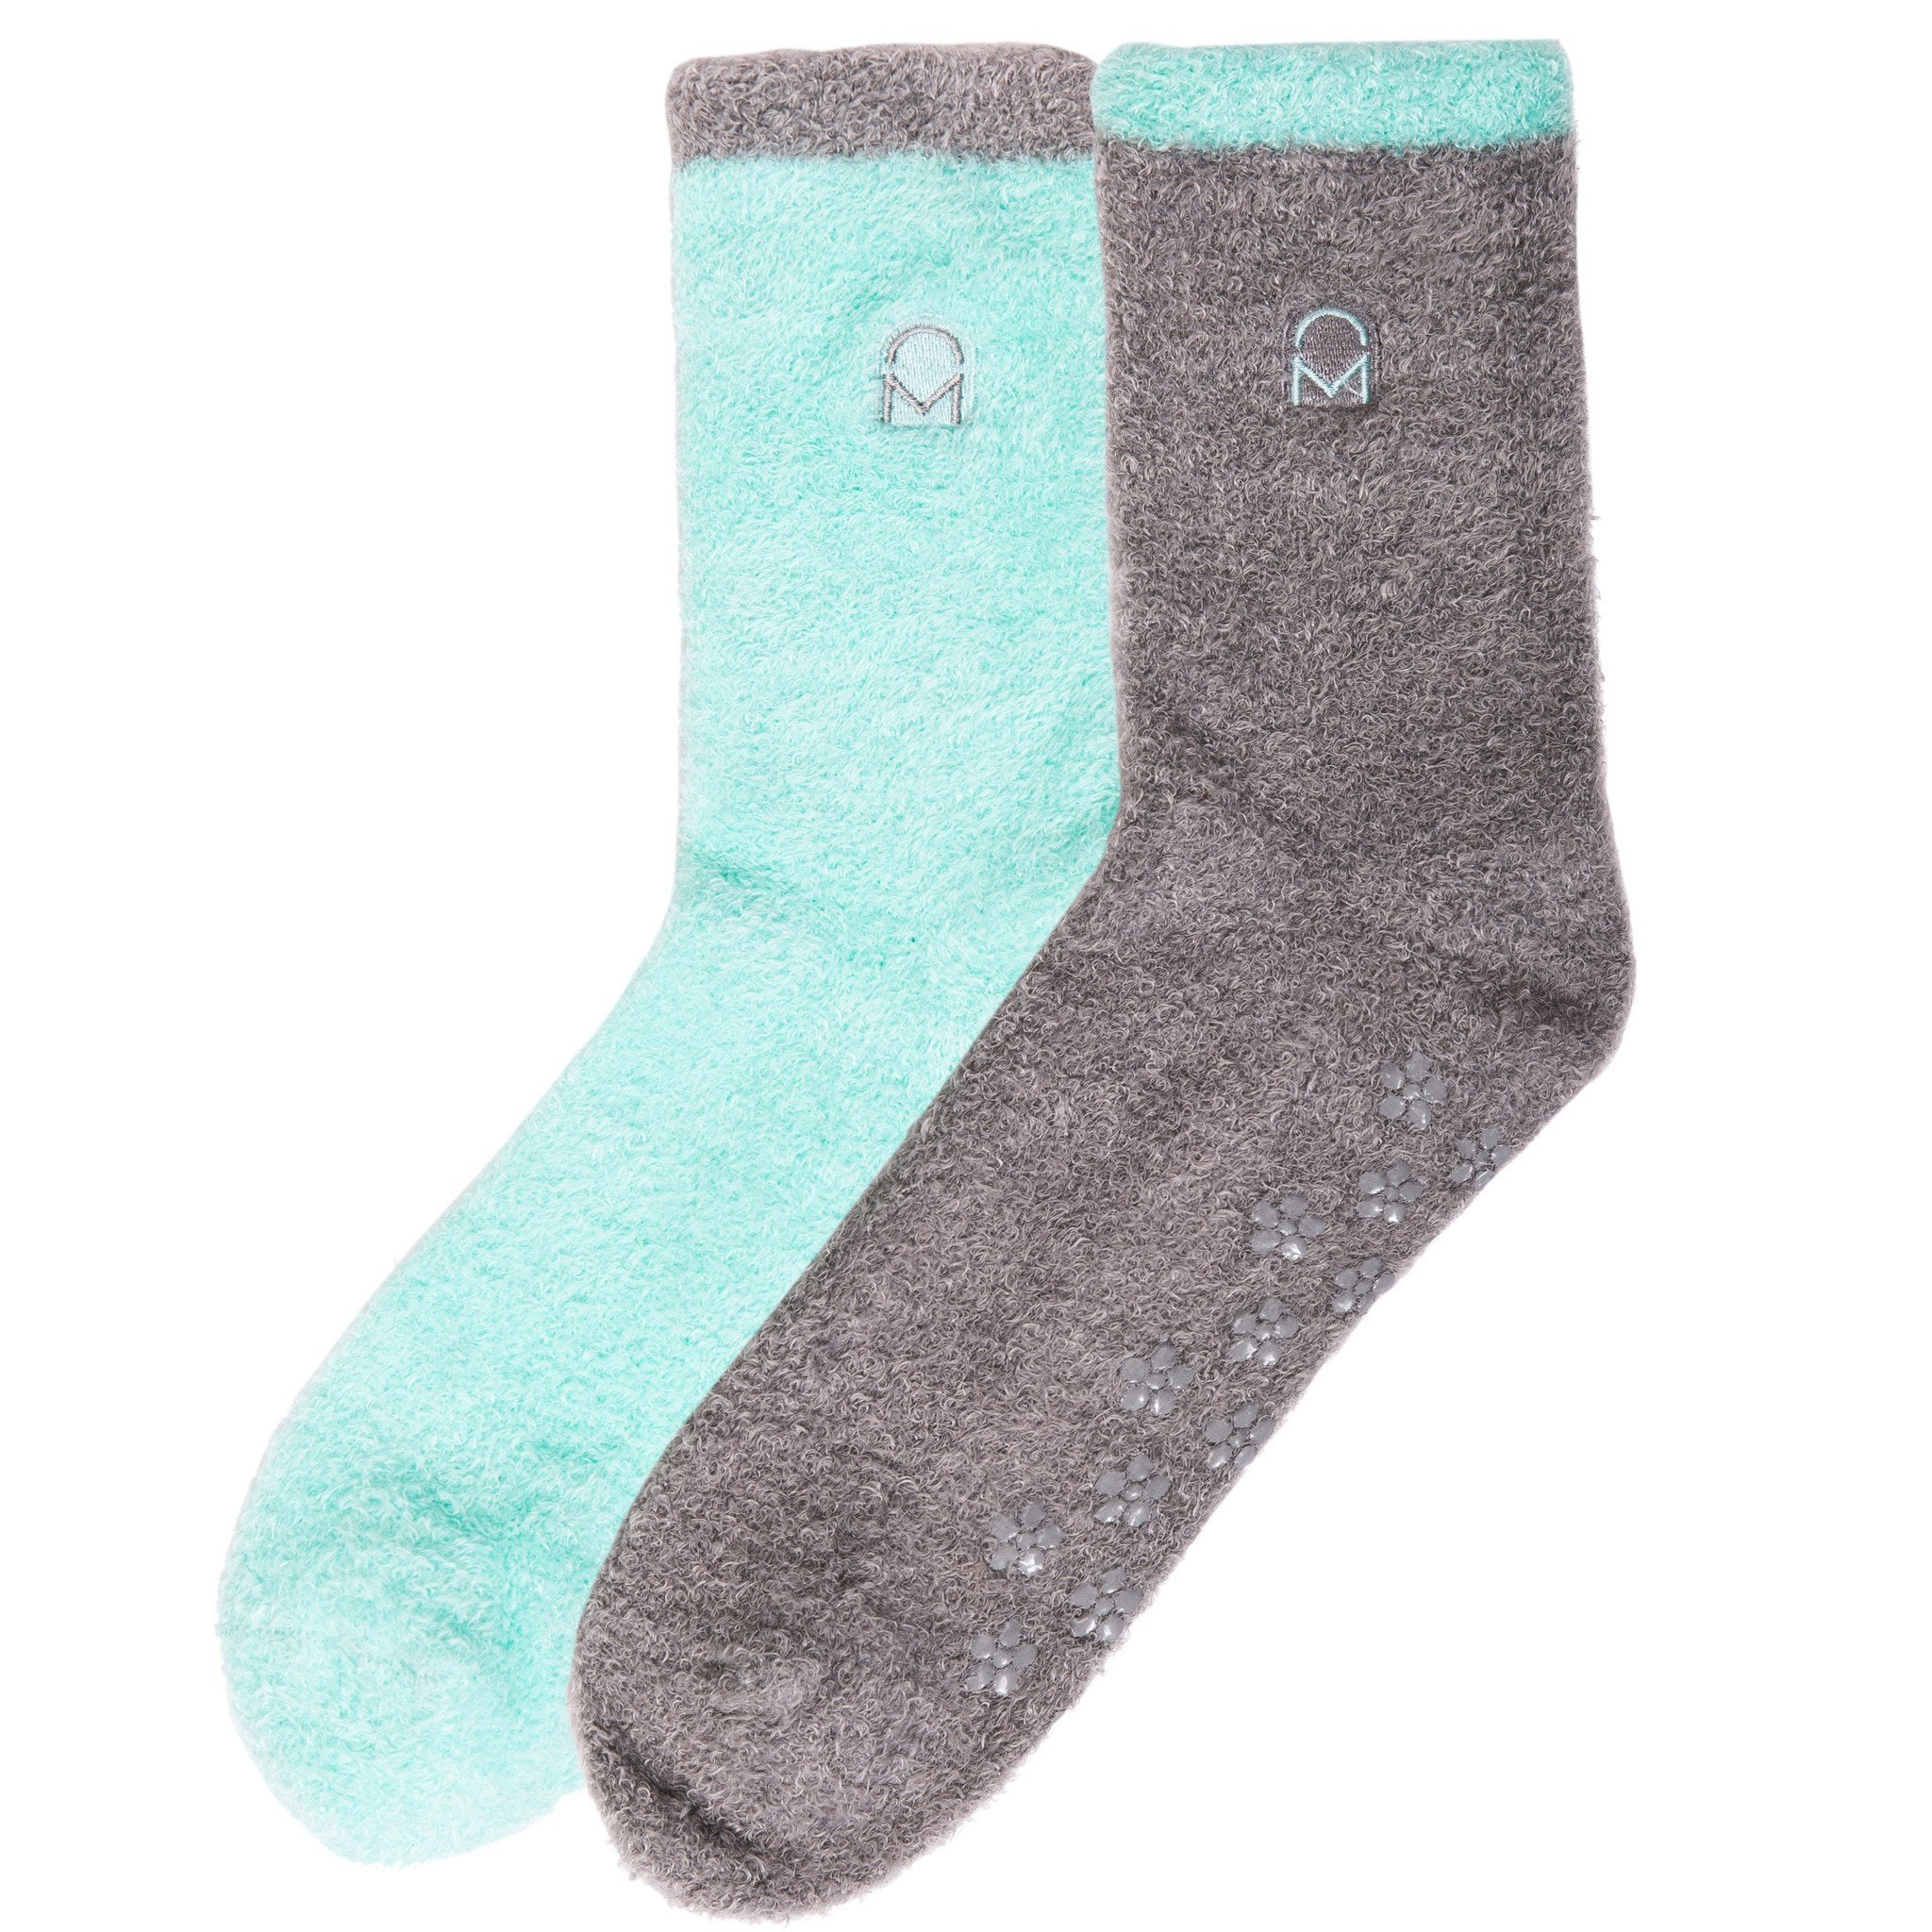 Box Packaged Women's Soft Anti-Skid Winter Feather Socks - 2-Pairs - Set C4